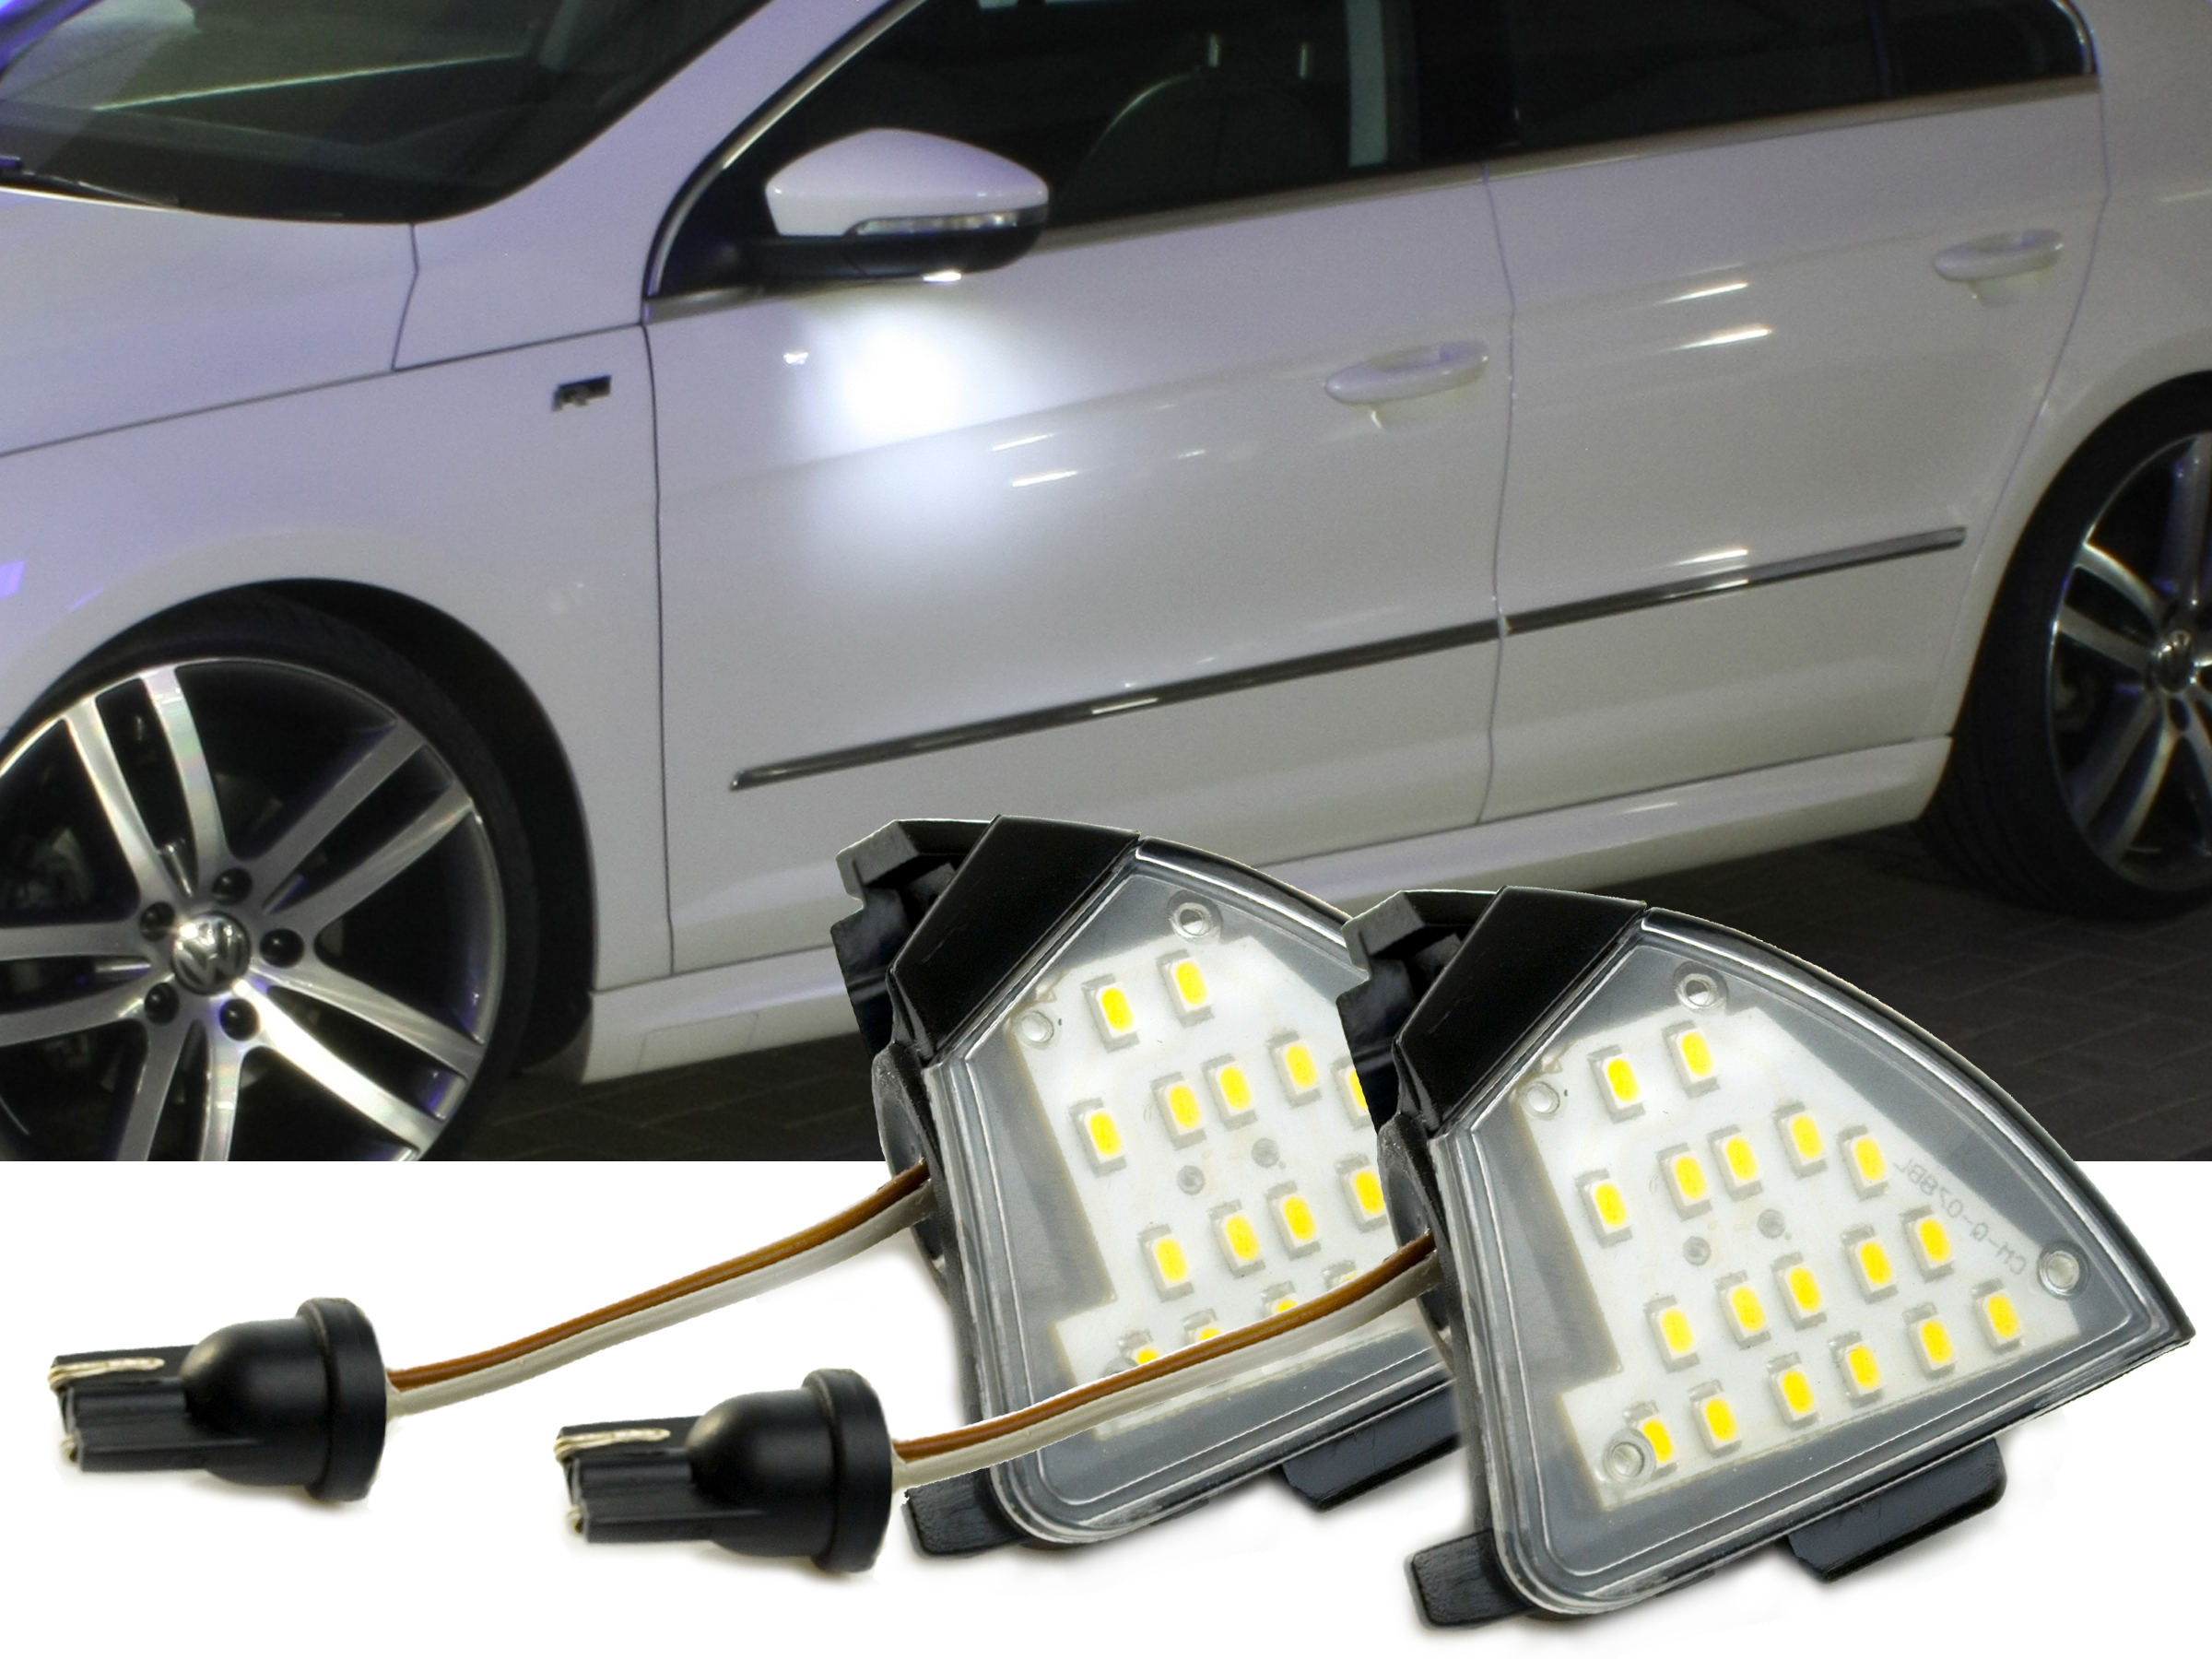 2er Set OEM LED Module für Umfeldbeleuchtung, Aussenspiegel, VW